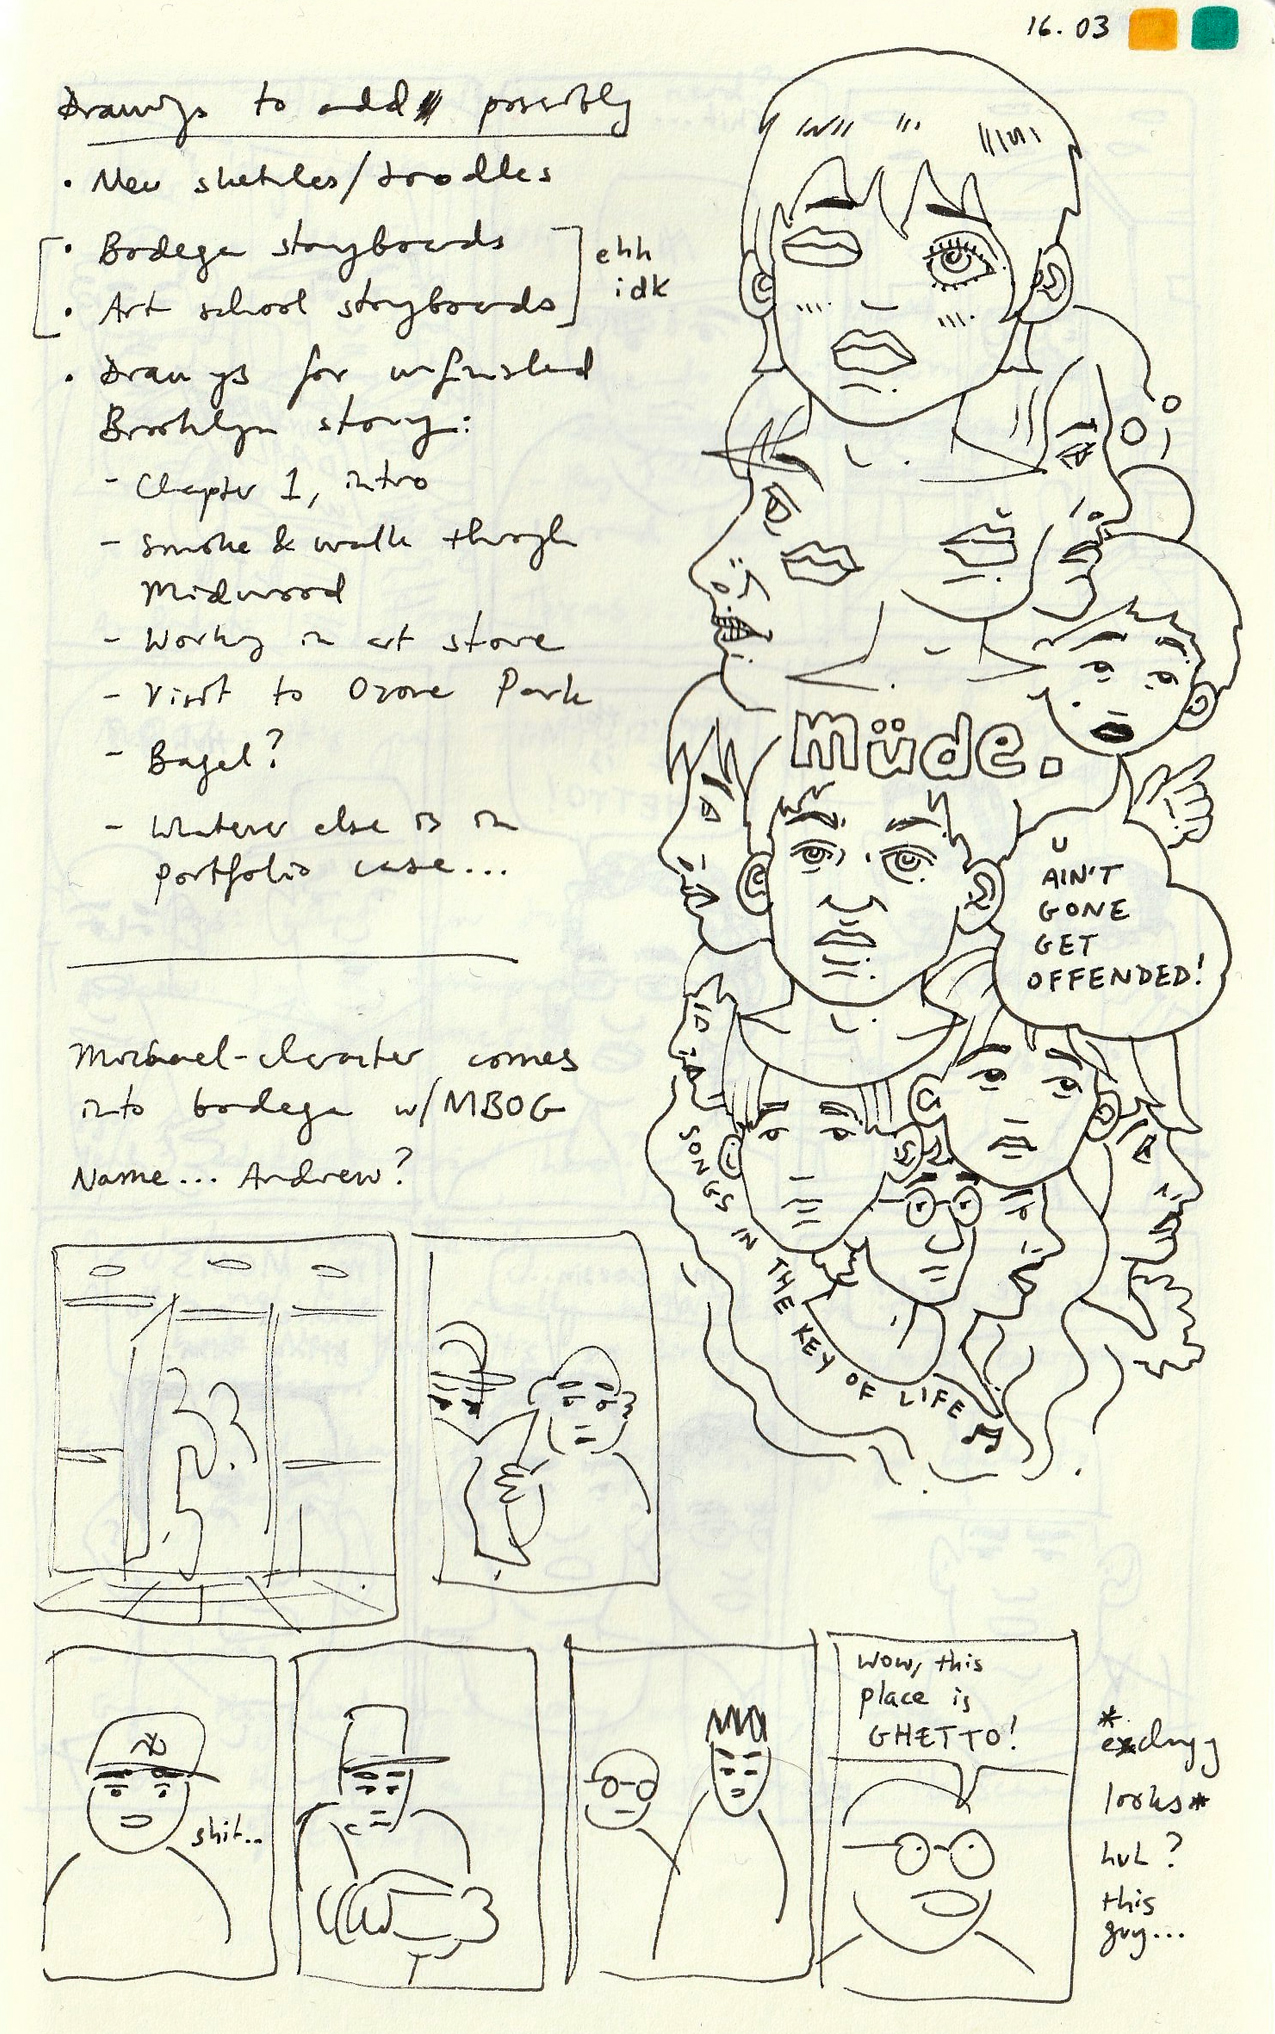 Ariel Cotton drawing sketchbook